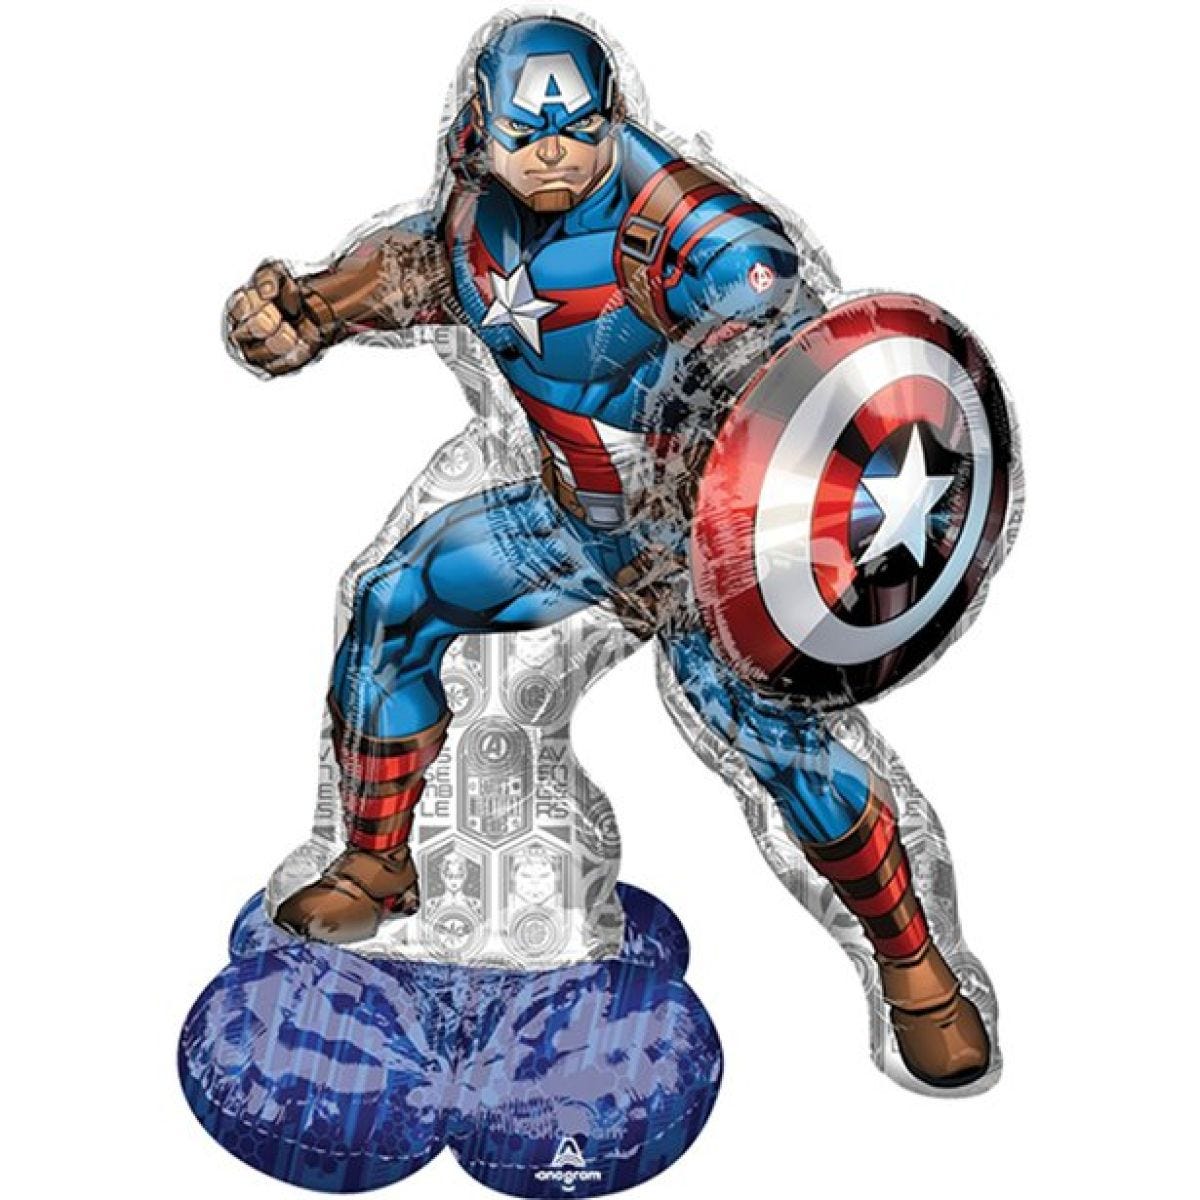 Avengers Captain America AirLoonz Foil Balloon - 58" x 37"